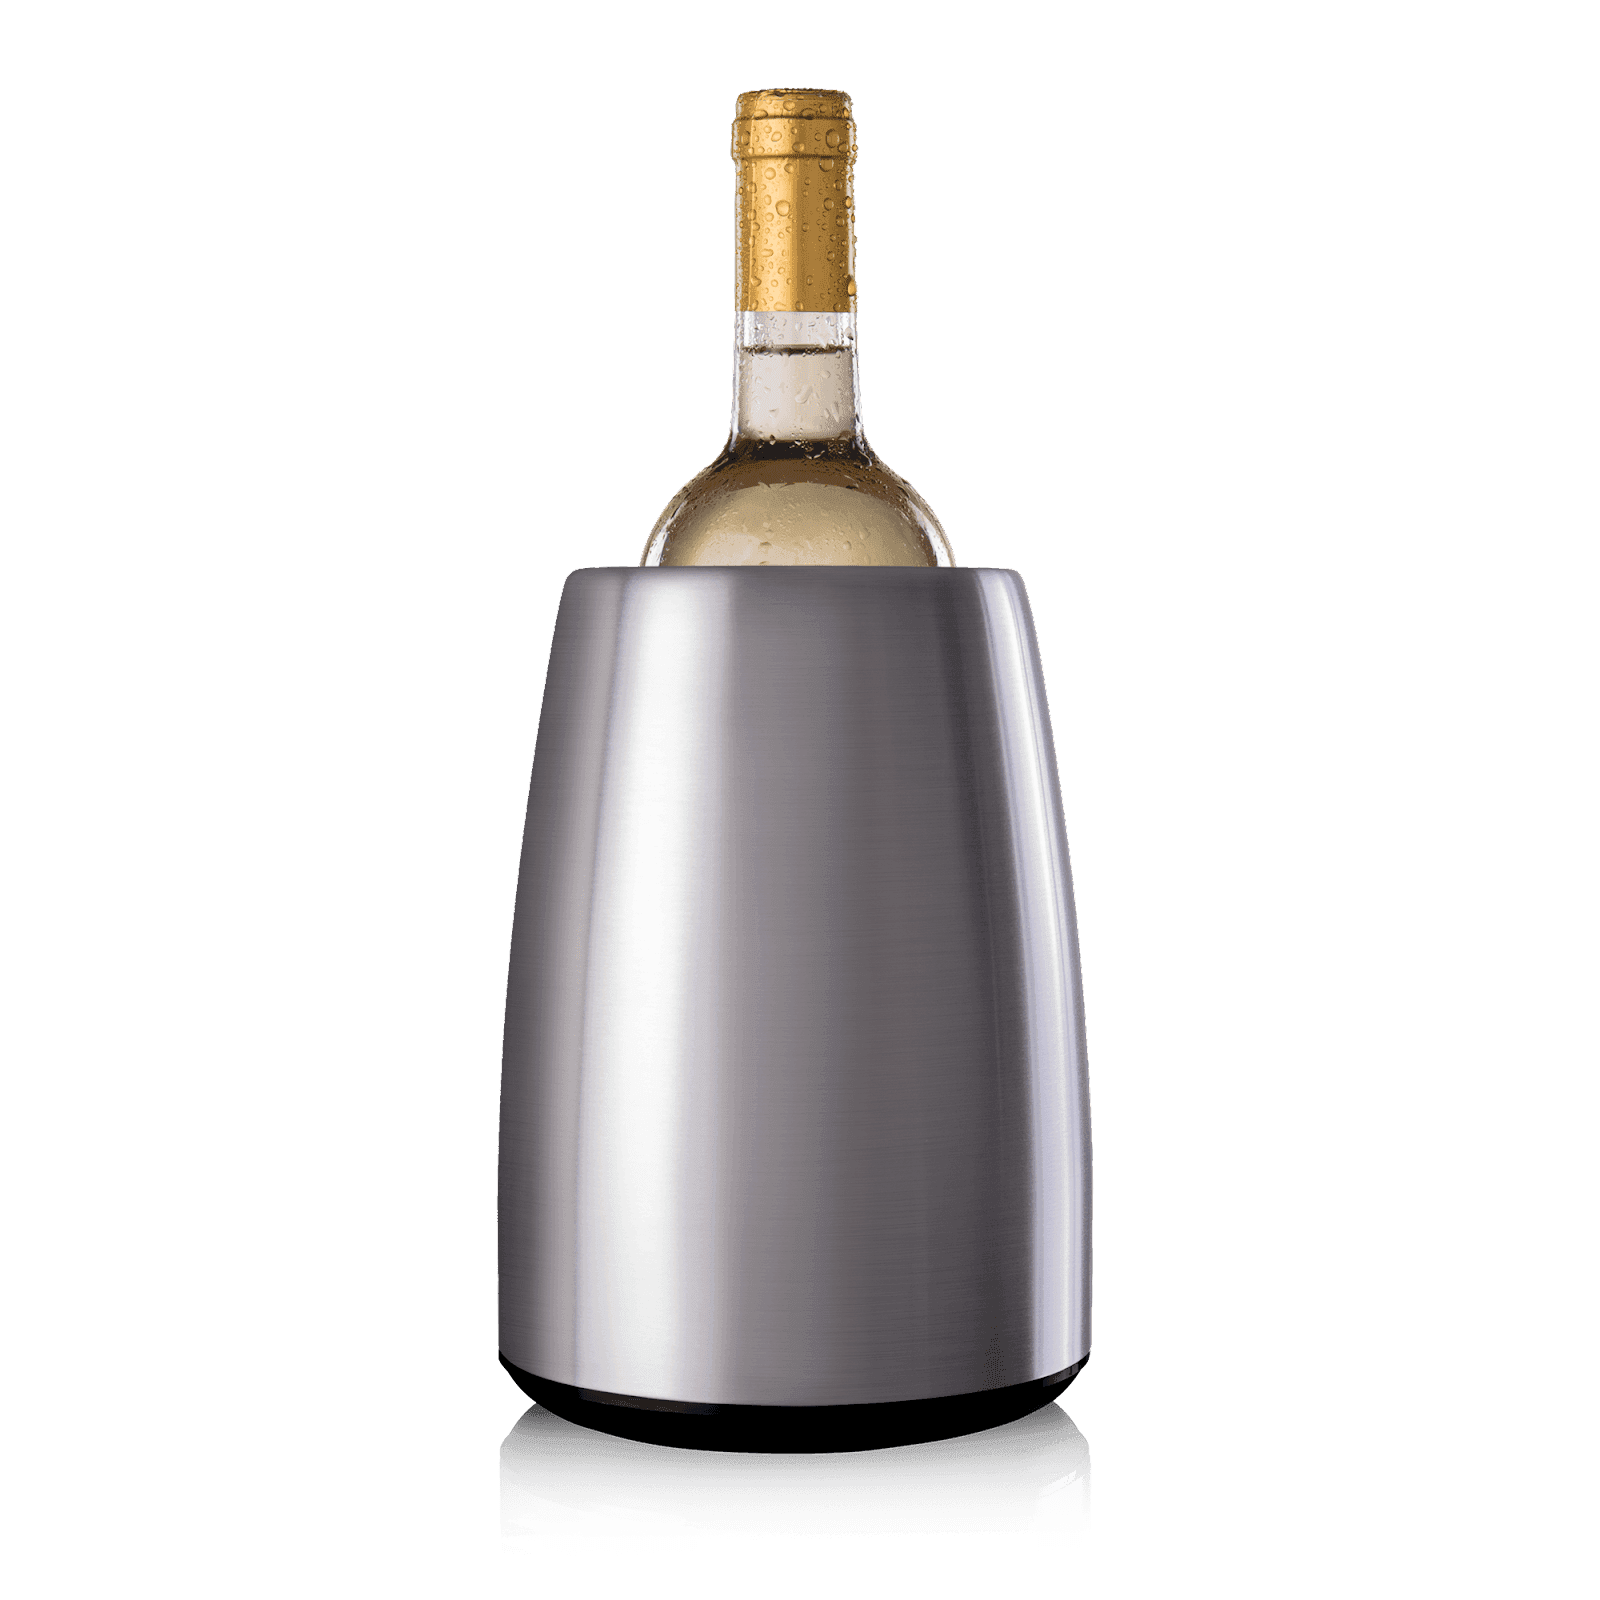 Wine cooler gift idea